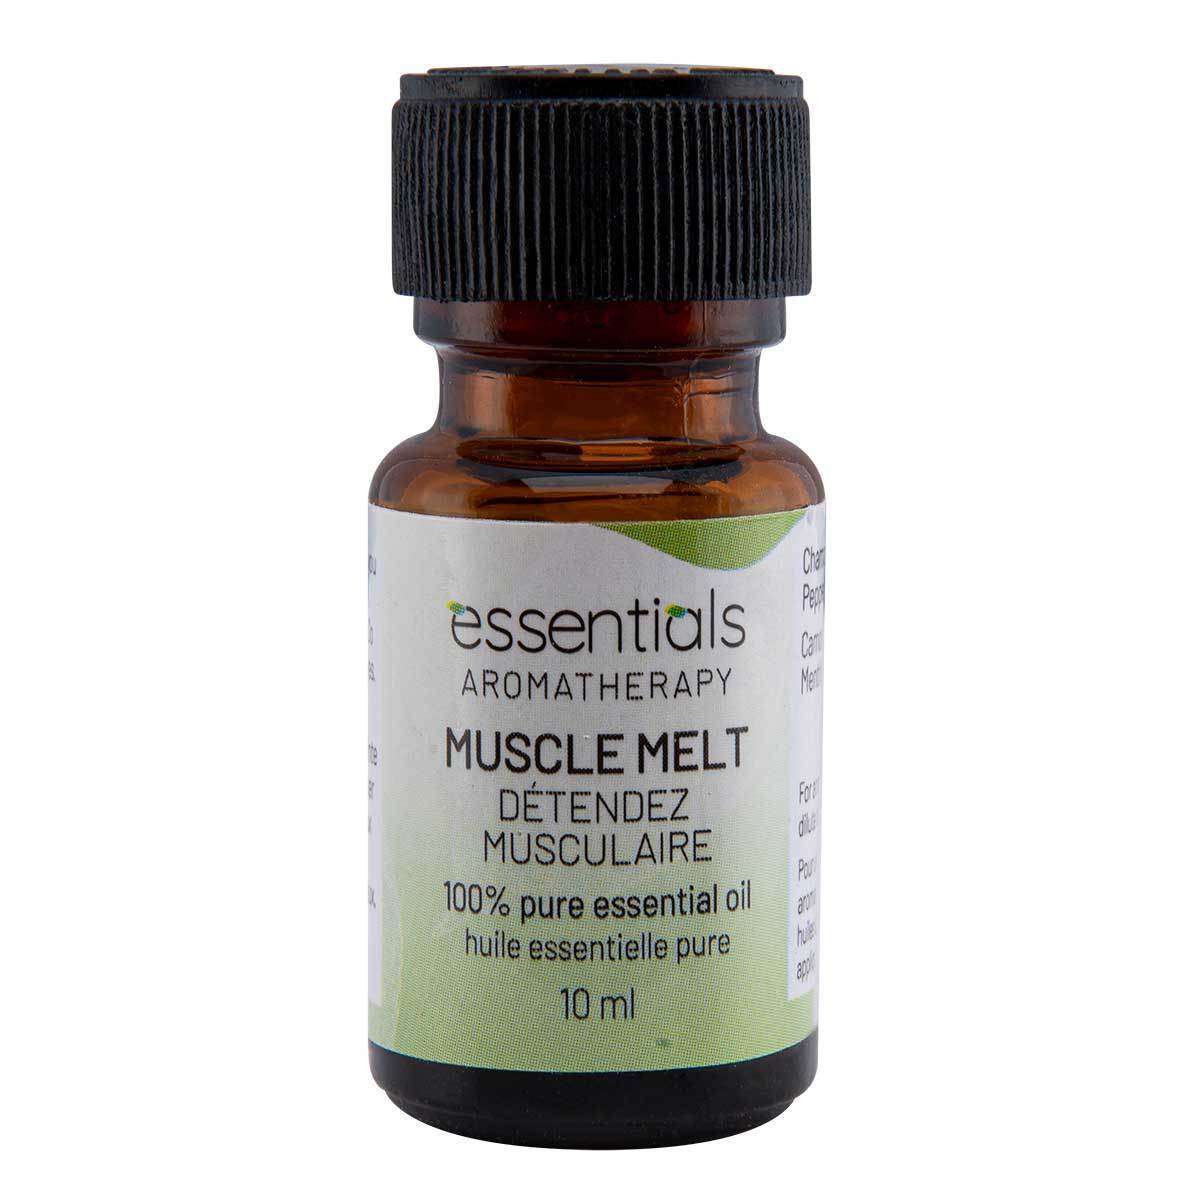 Essential Oil Blend Muscle Melt - 10mL Bottle